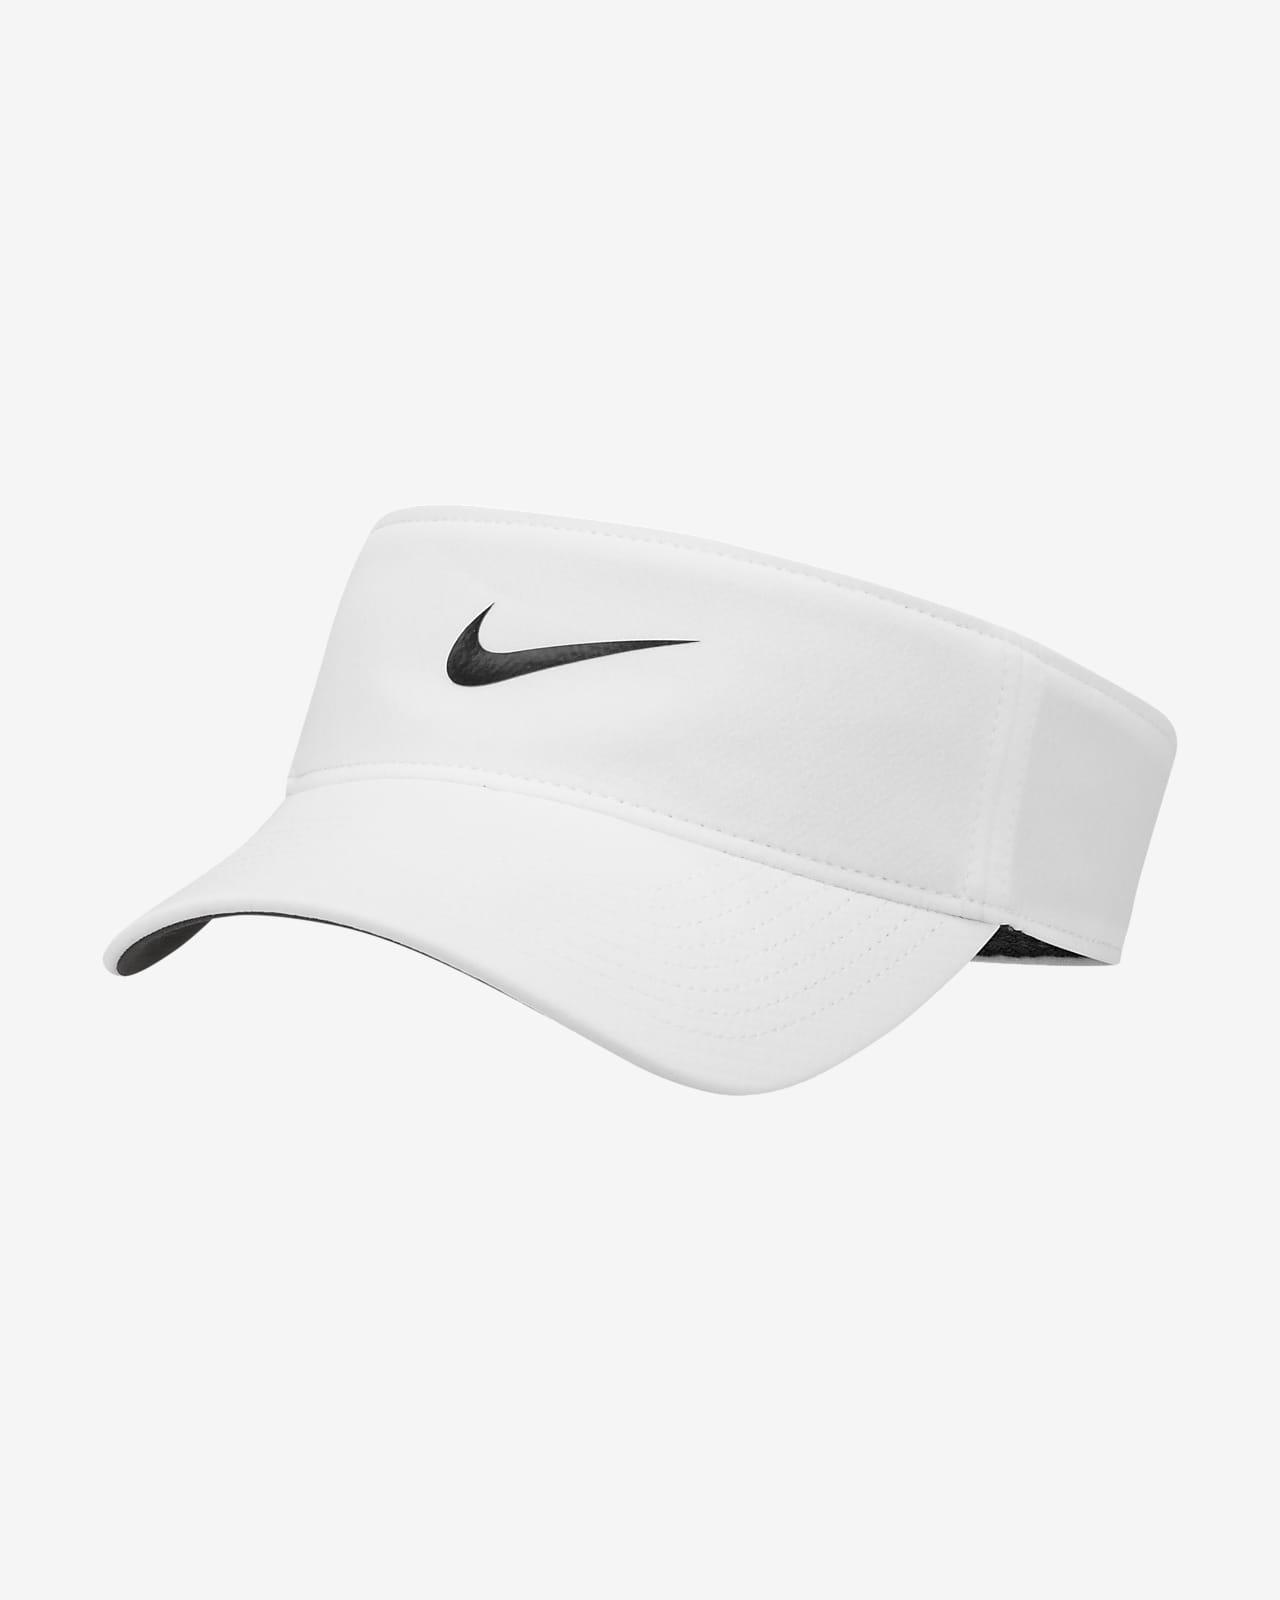 Nike Dri-FIT Ace solskjerm med Swoosh-logo